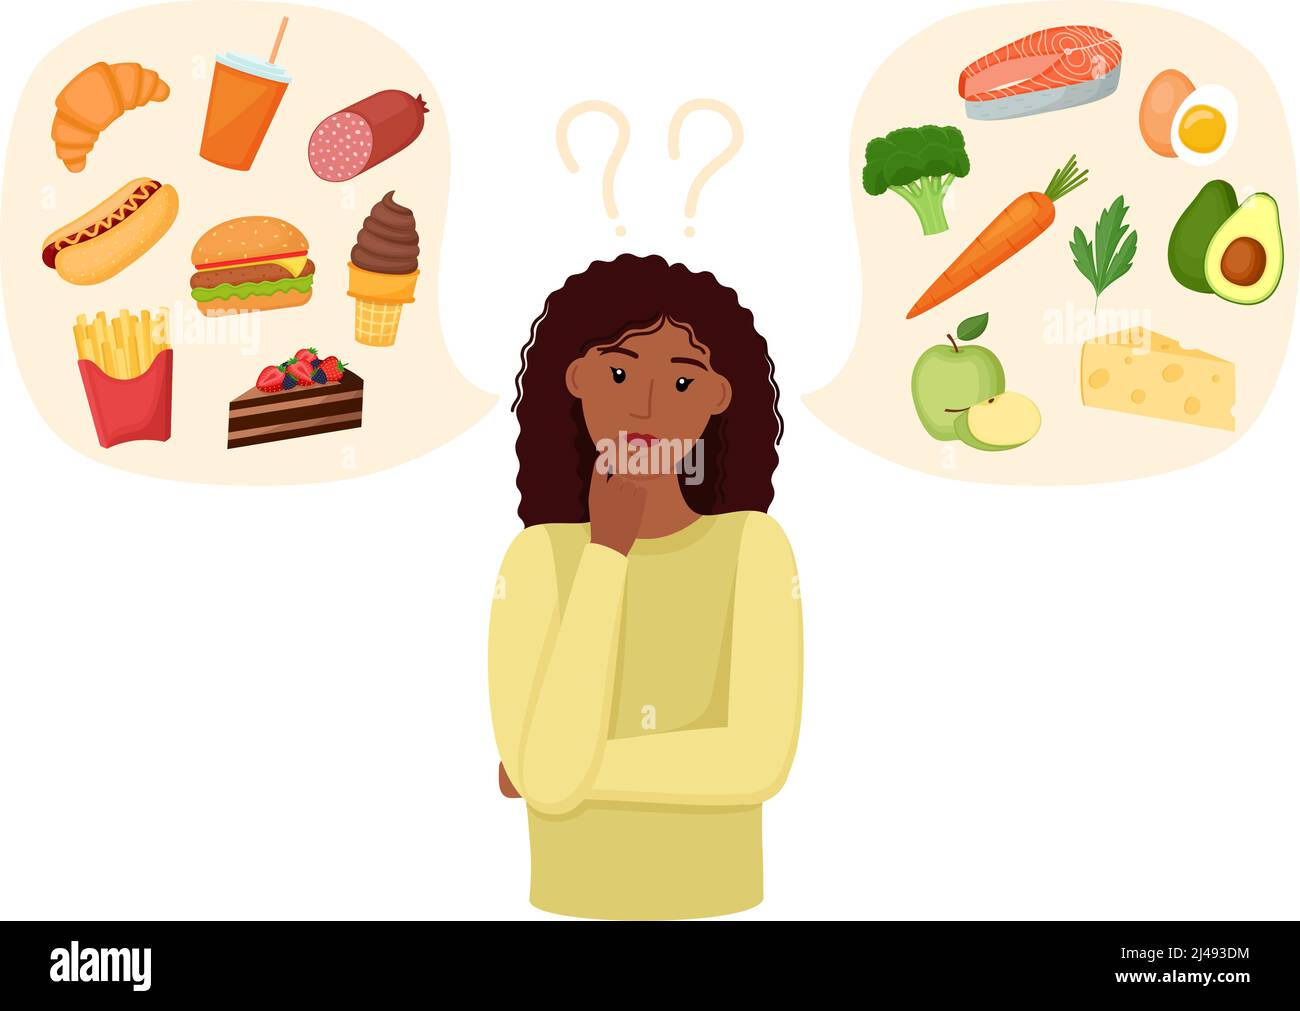 Woman choosing between healthy and unhealthy food. Fastfood vs balanced menu. Concept vector illustration Stock Vector